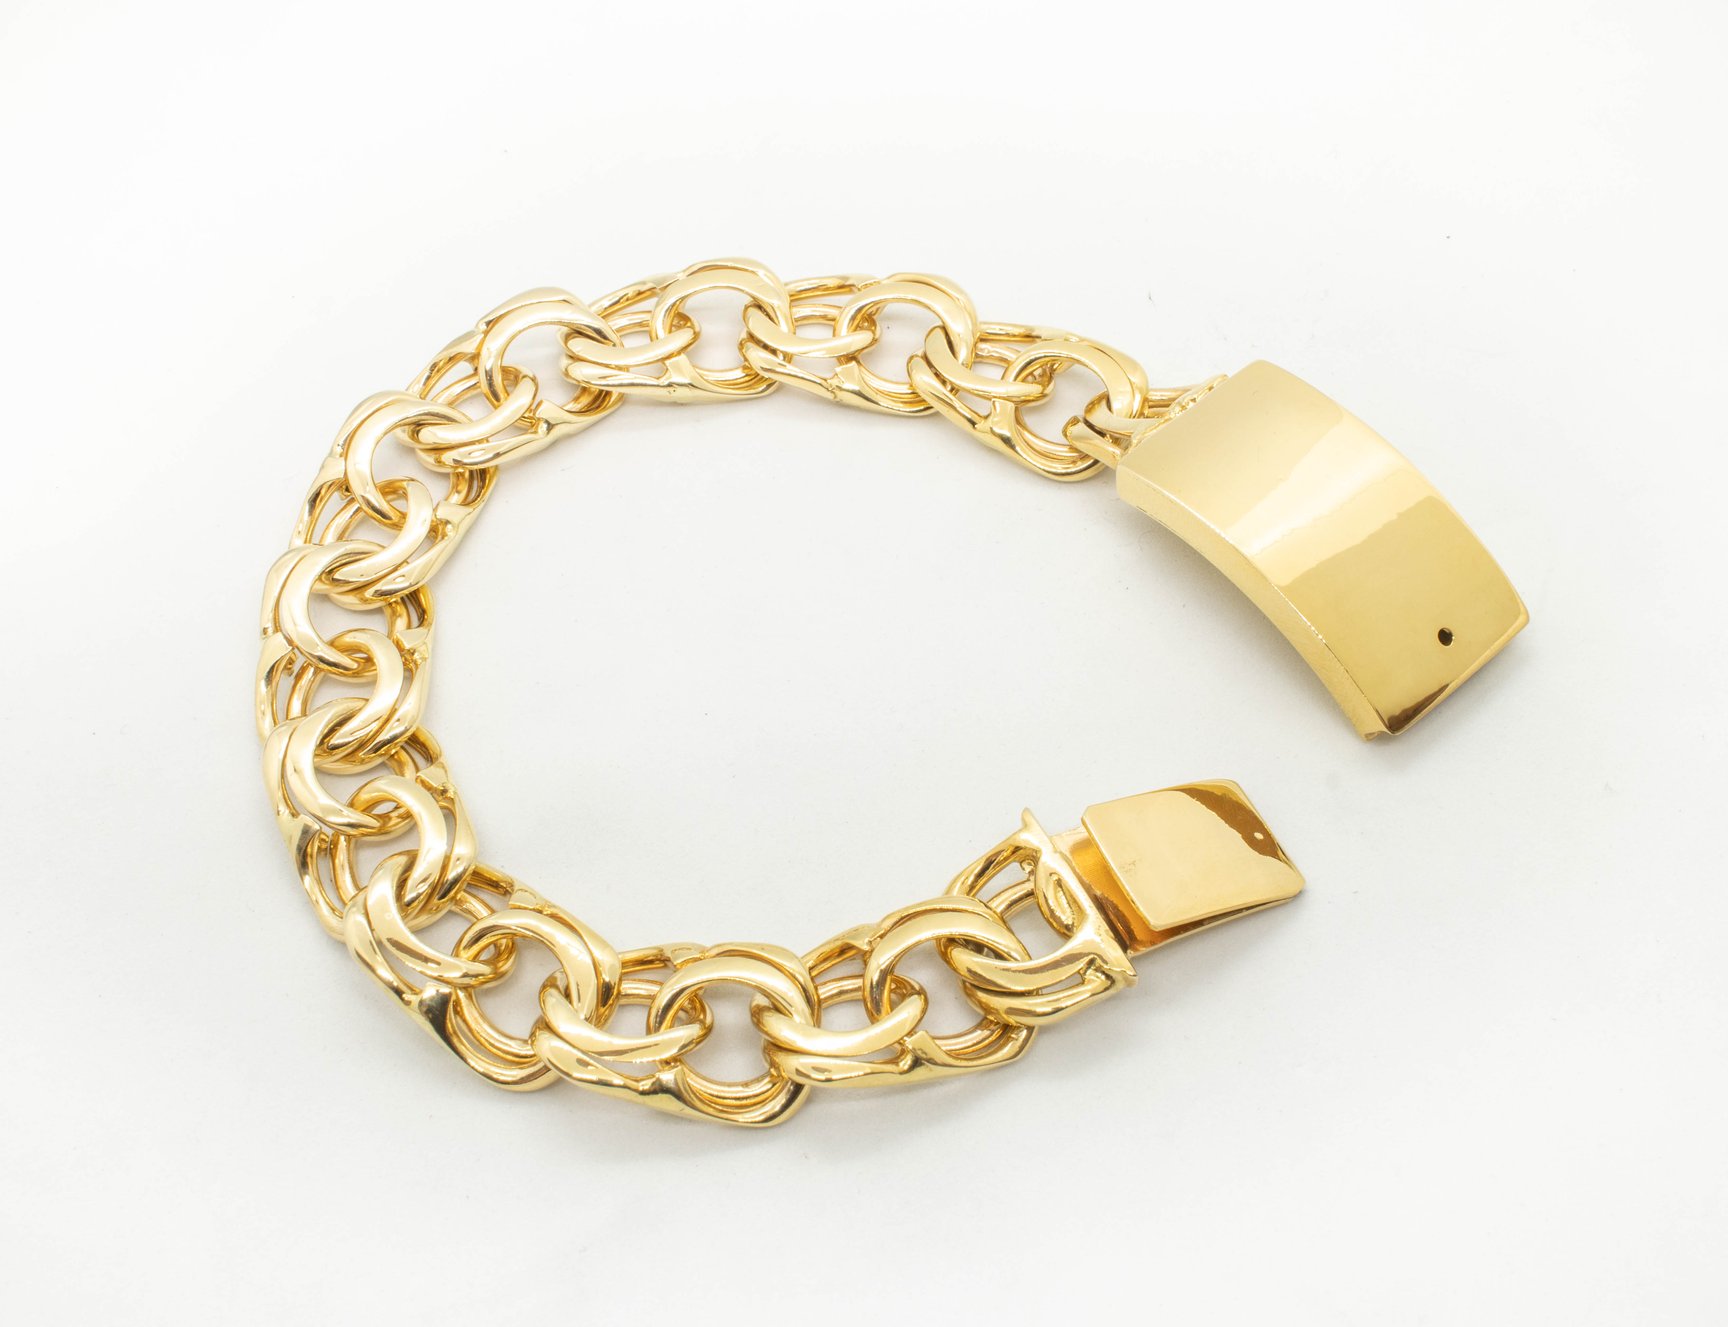 Chino Link Bracelet 30g 10k